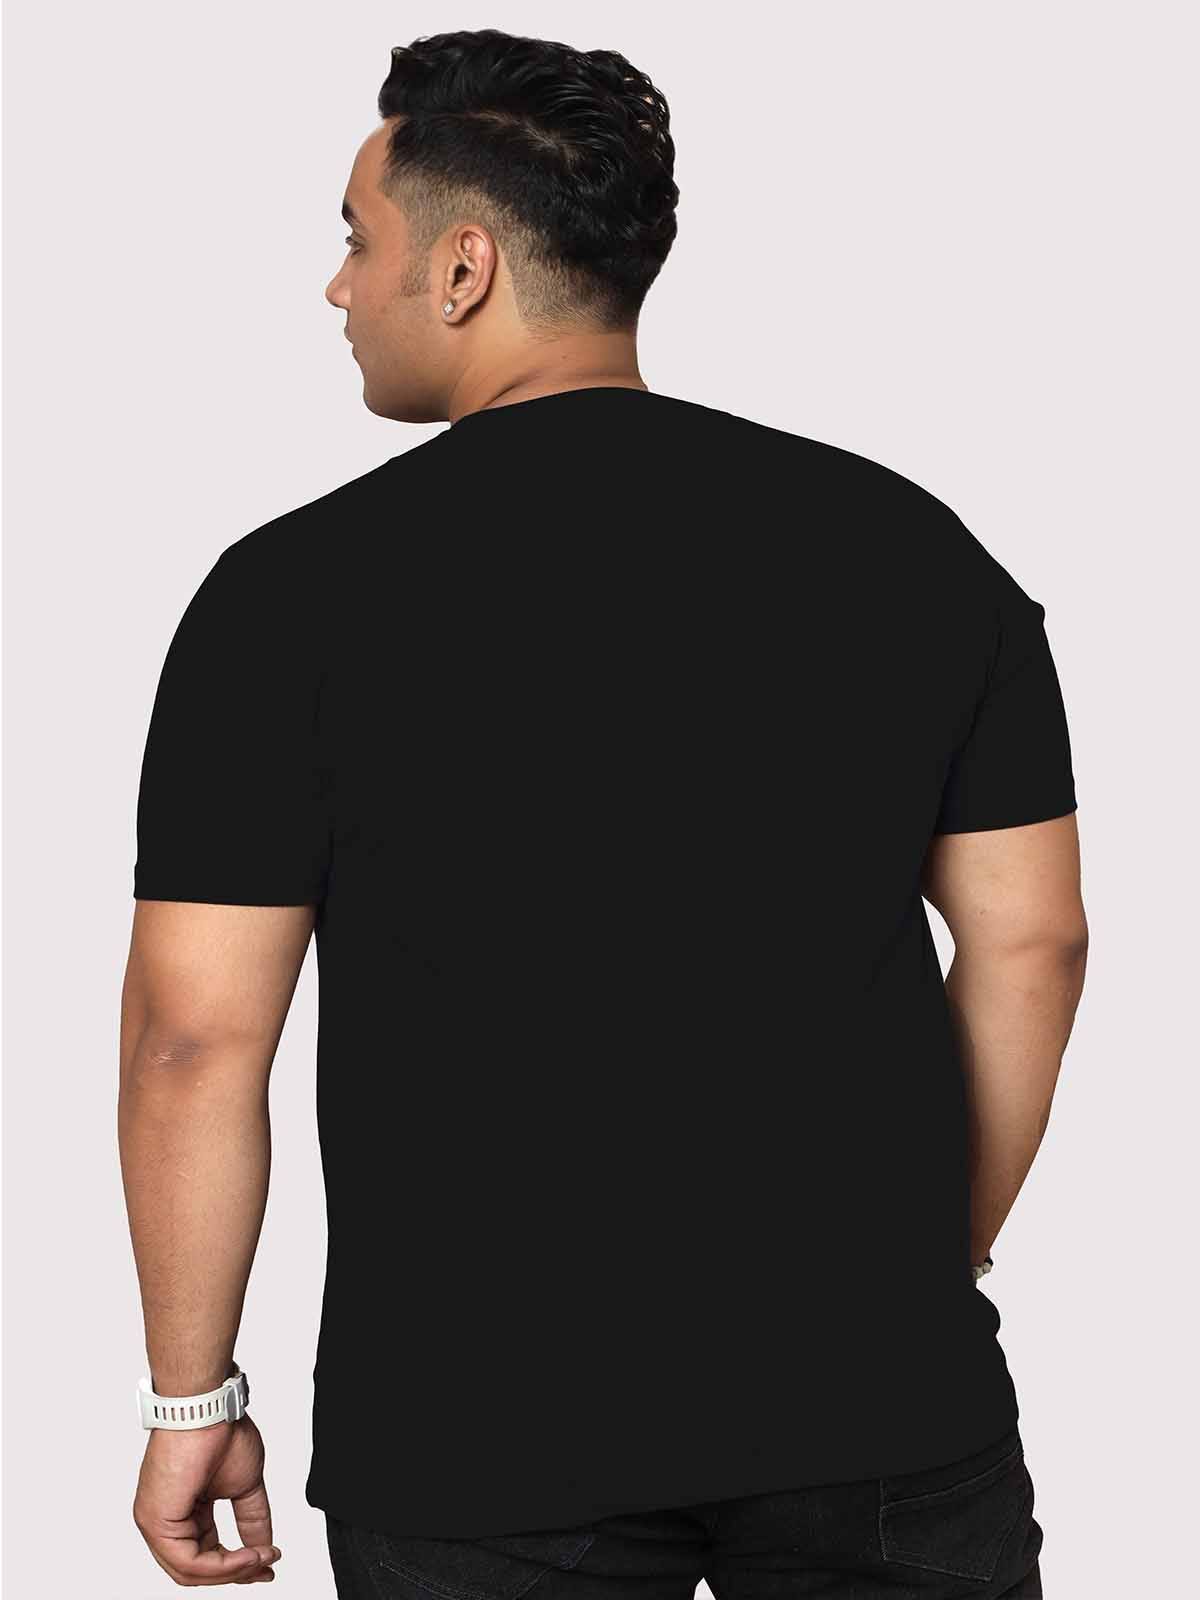 Men Plus Size Black Tropical Skull Printed Round Neck T-Shirt - Guniaa Fashions